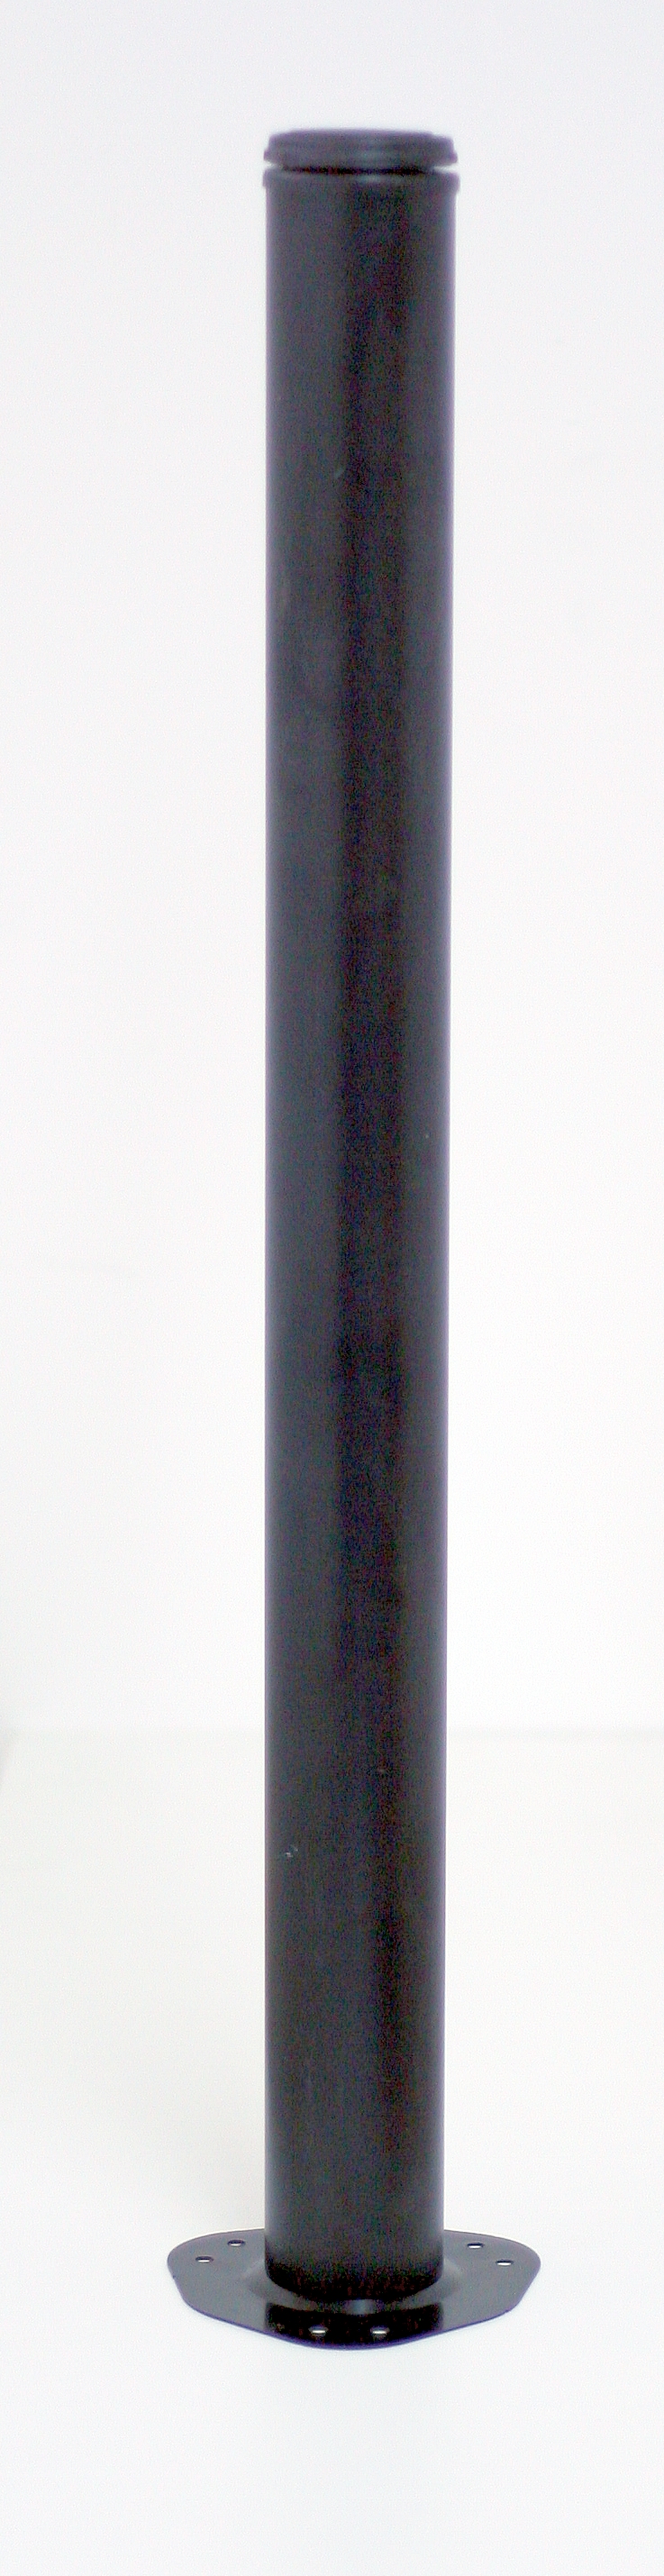 ELEMENT METAL ROUND TABLE LEG 60MM BLACK